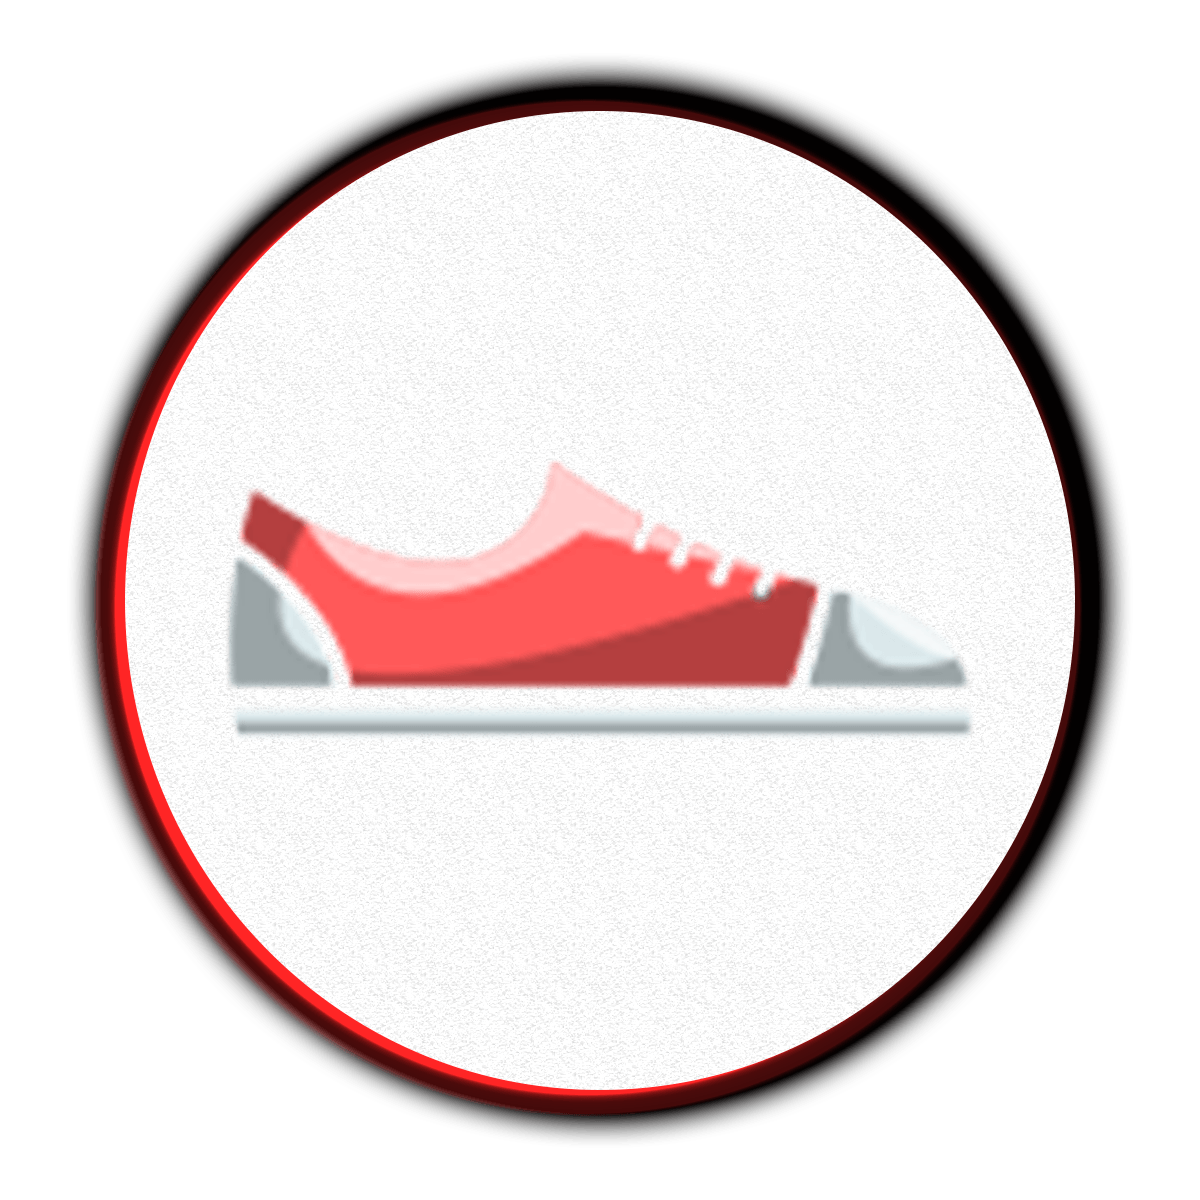 jogging-running running shoe